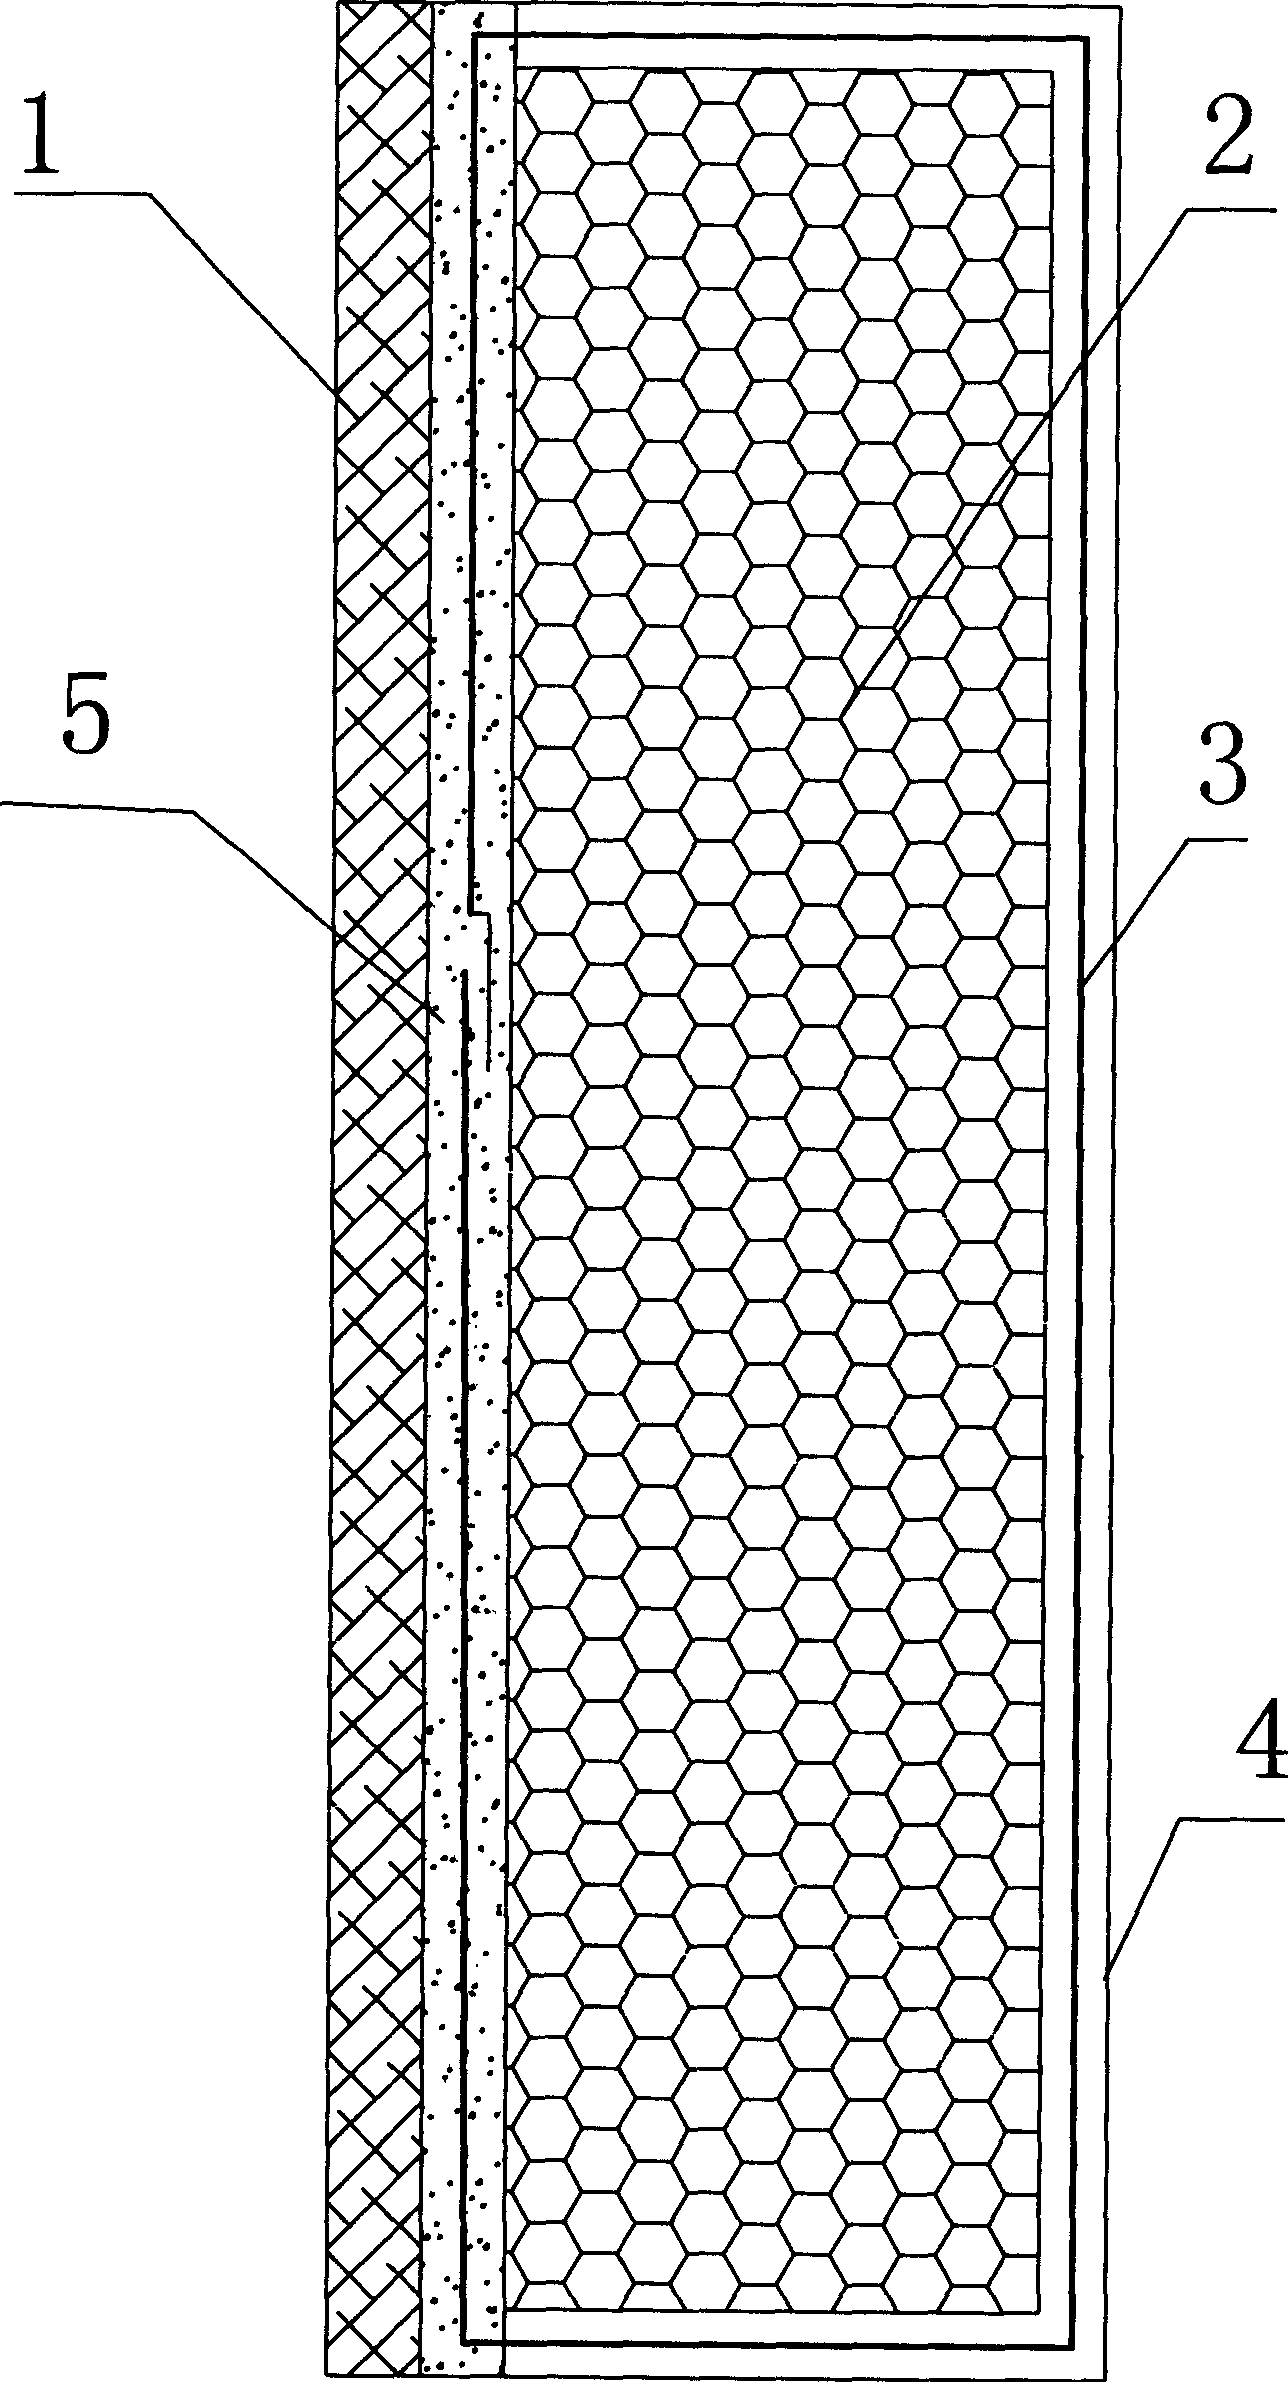 Composite insulating brick, and process technique